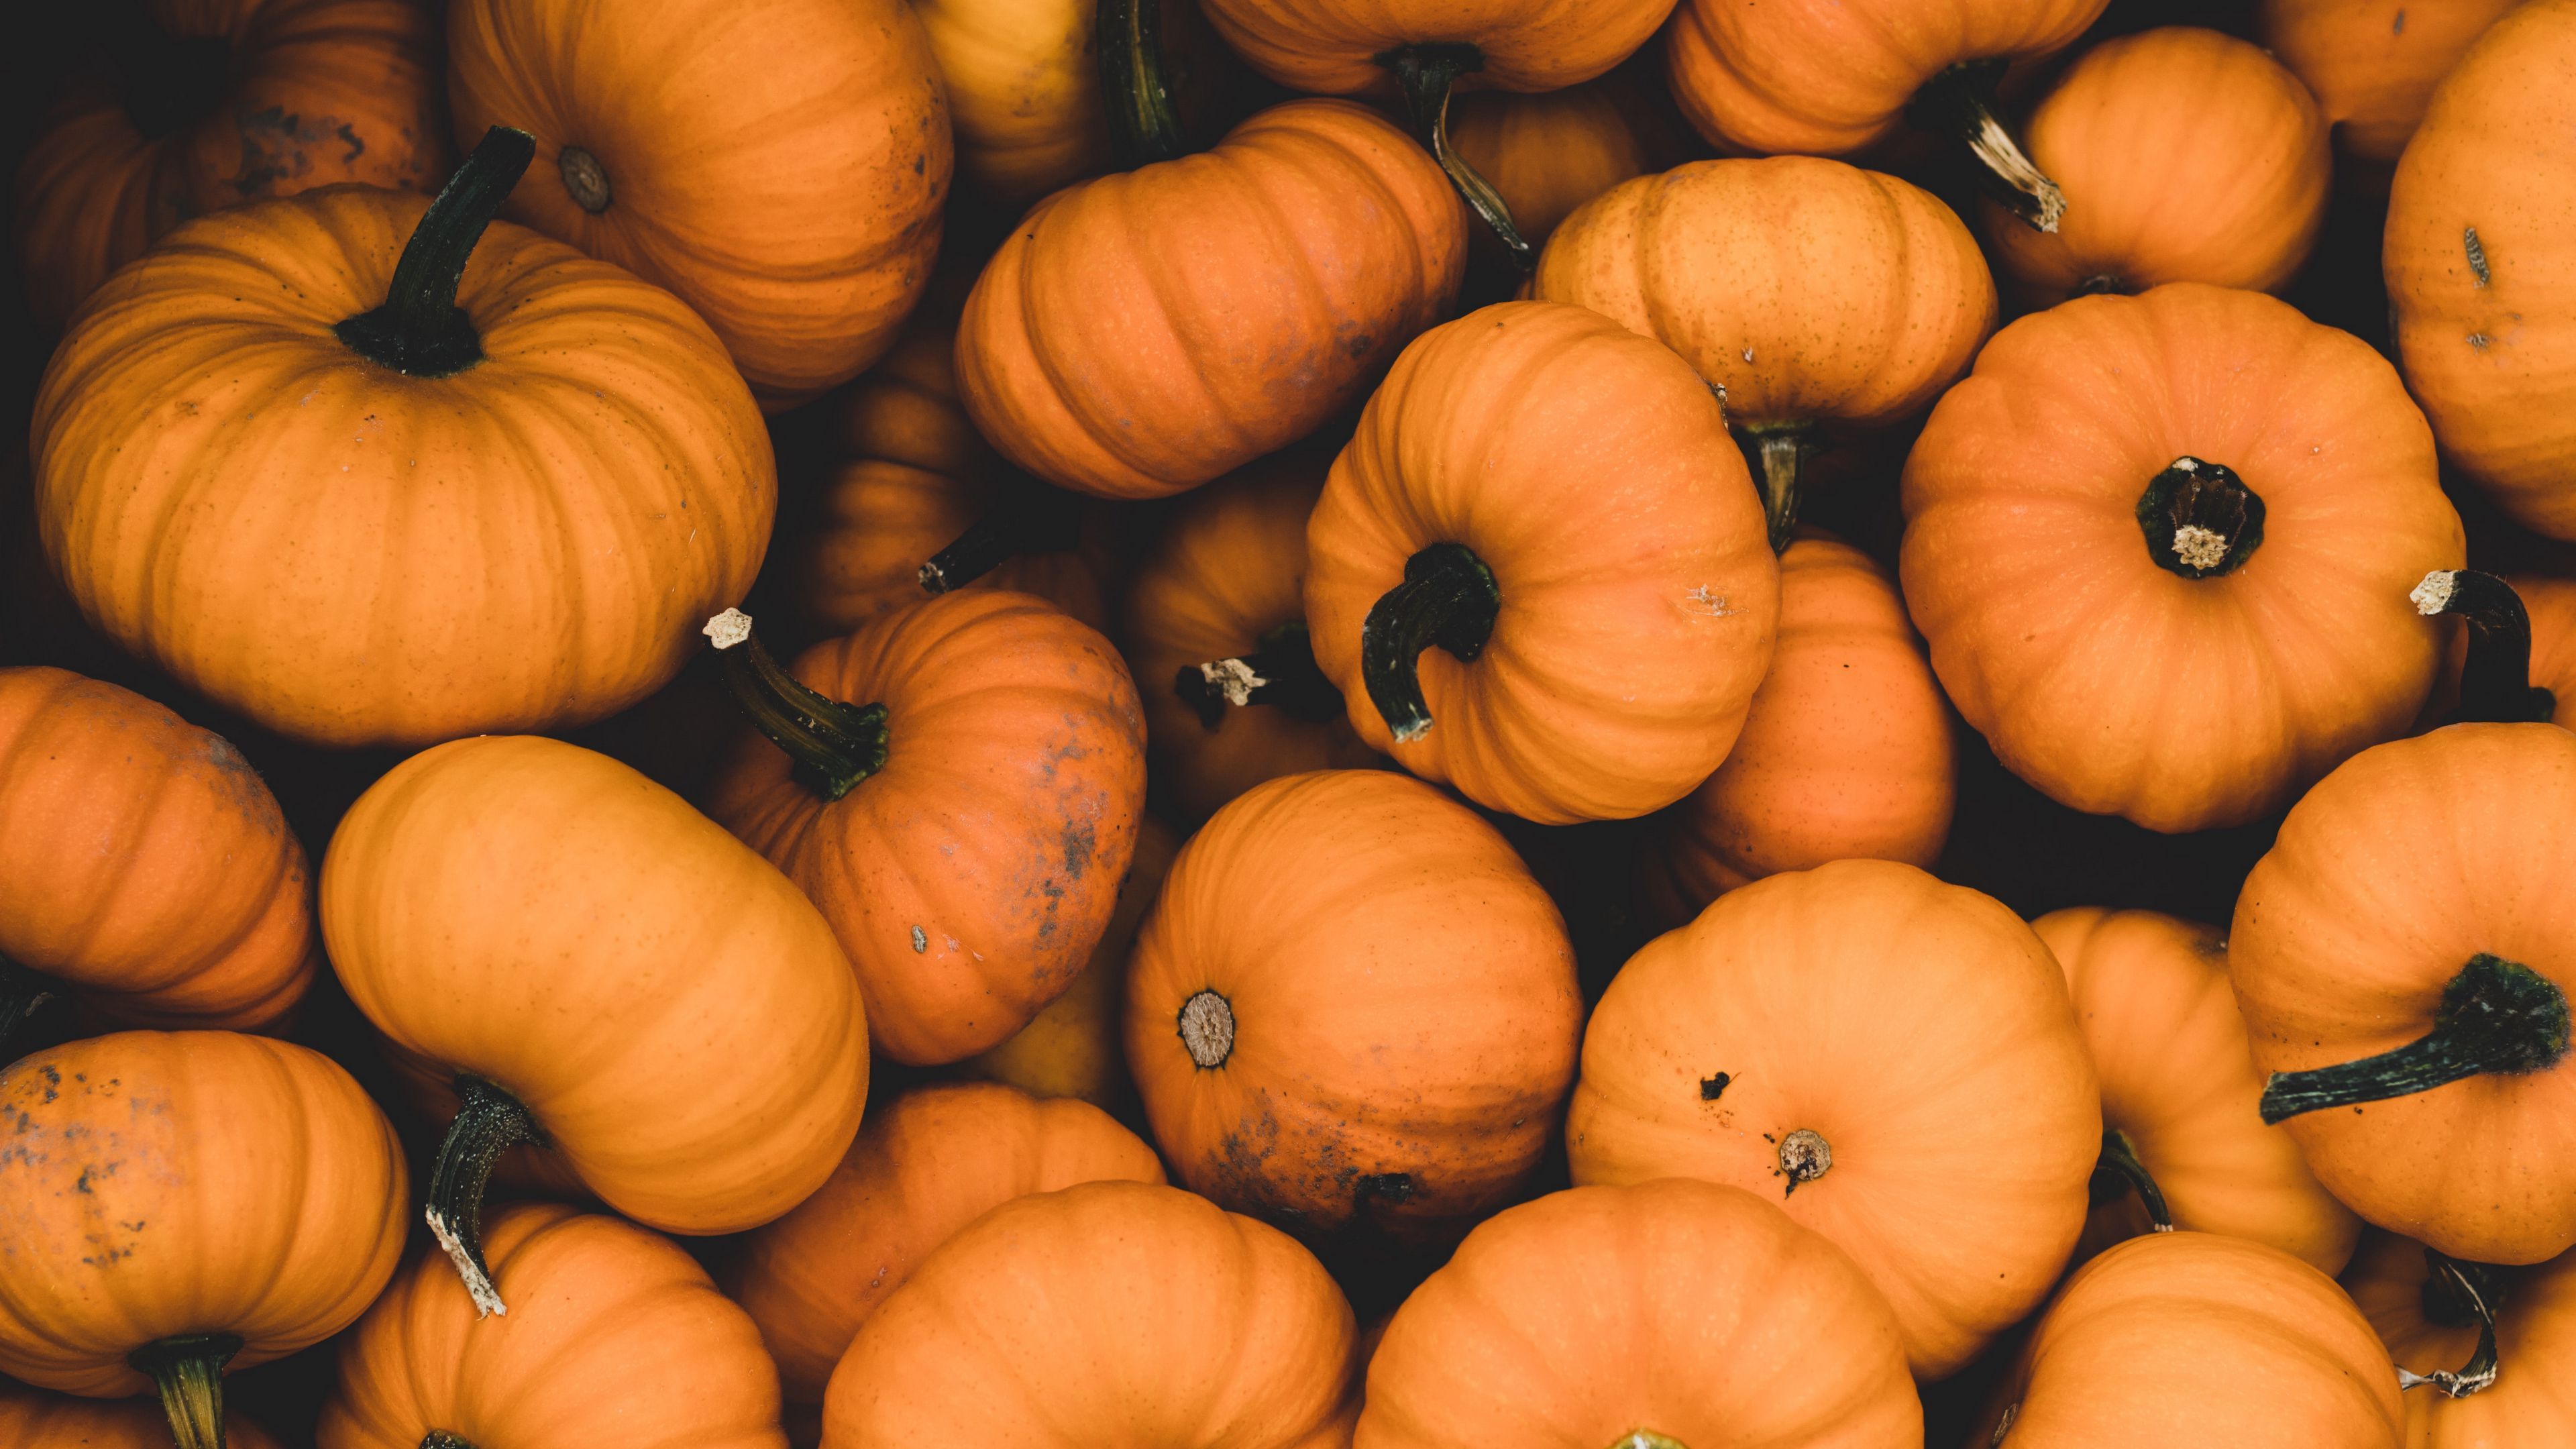 Download wallpaper 3840x2160 pumpkin, ripe, orange, harvest, autumn 4k uhd 16:9 HD background